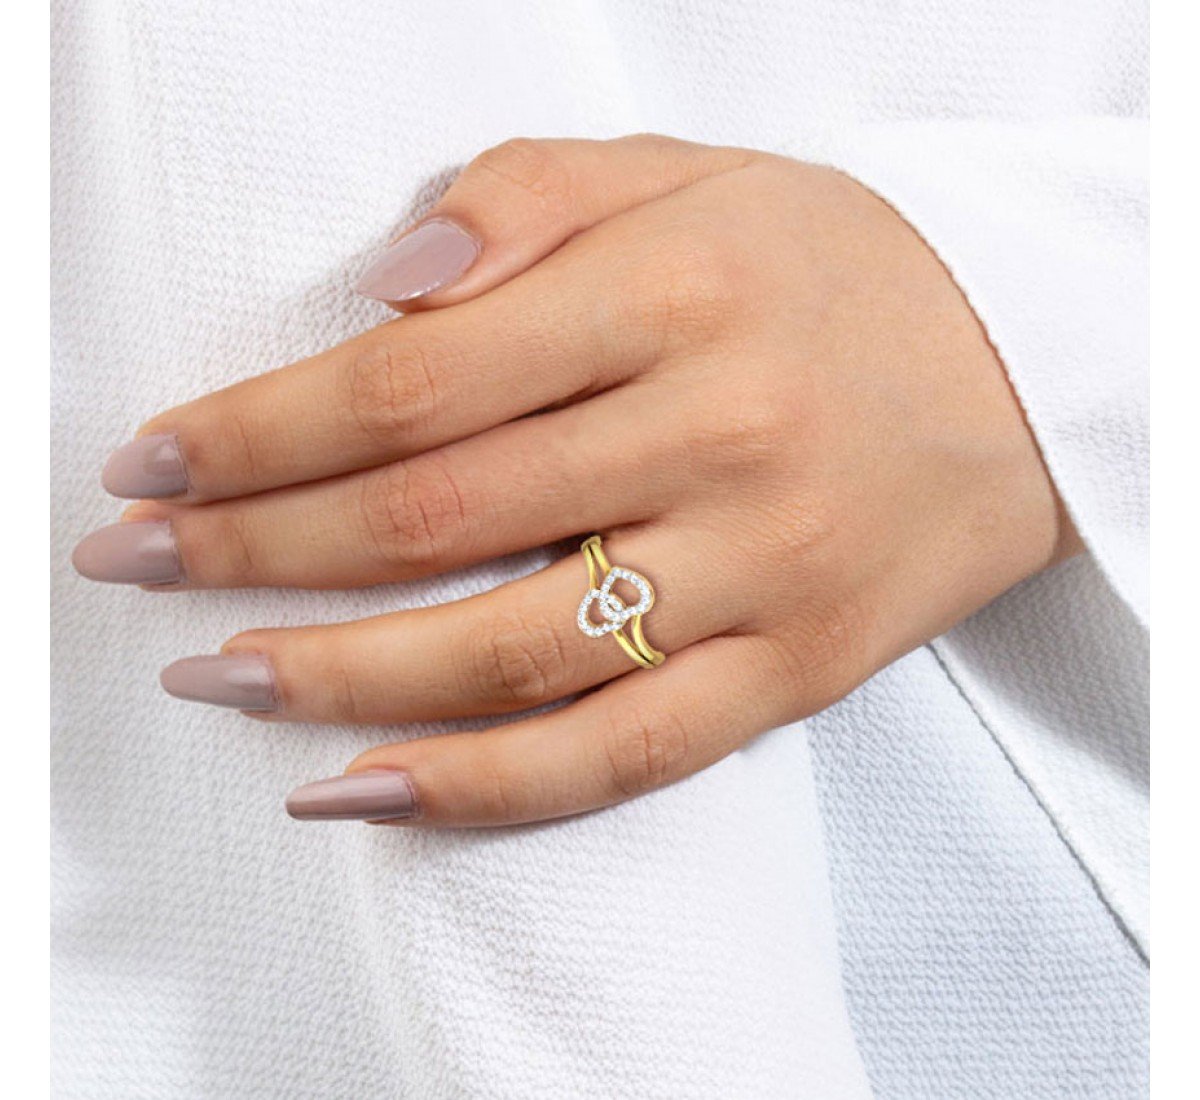 Alpenglow Diamond Ring